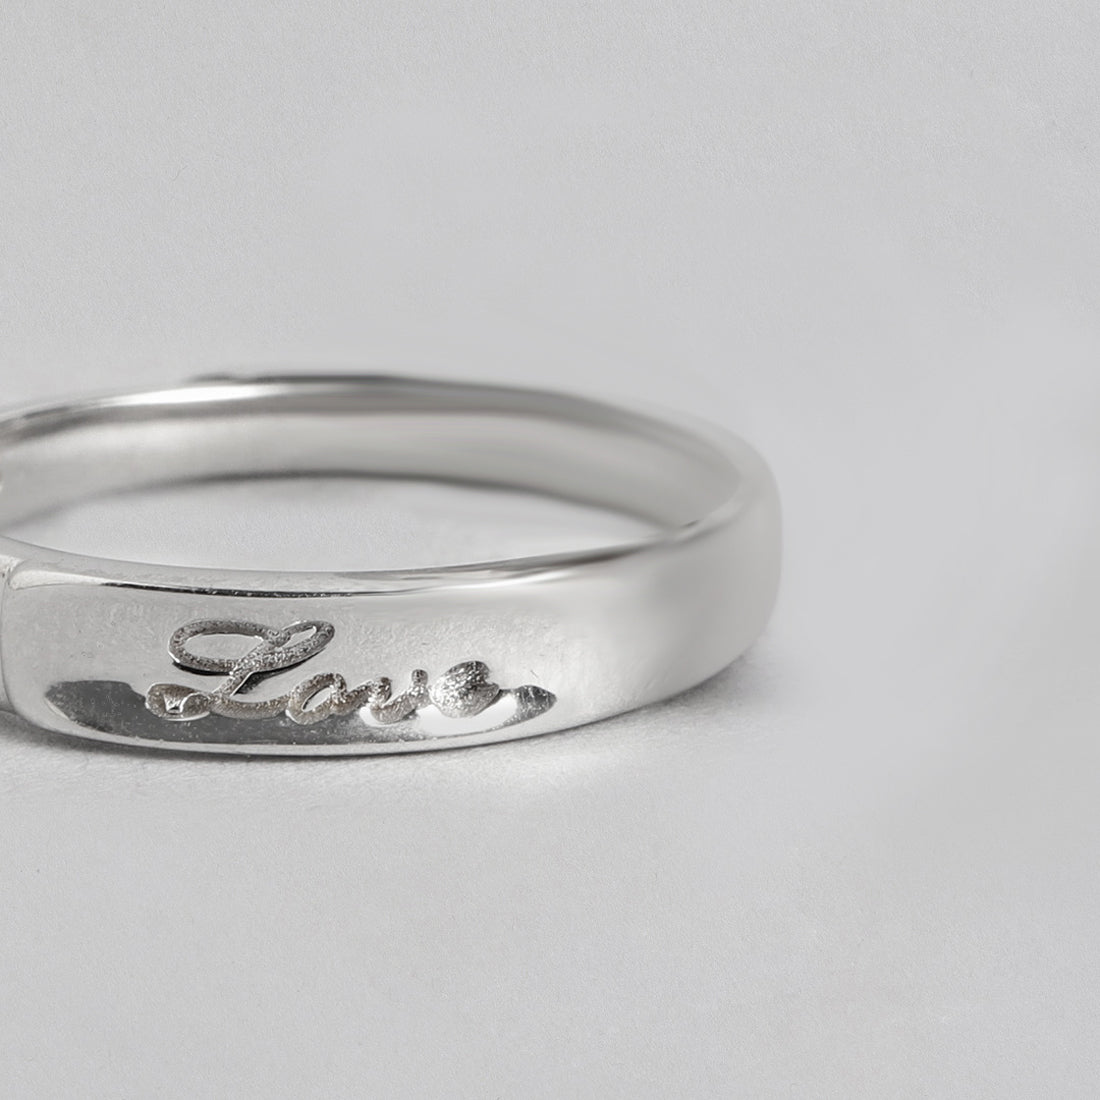 Modern Love Mens 925 Sterling Silver Ring for Him (Adjustable)